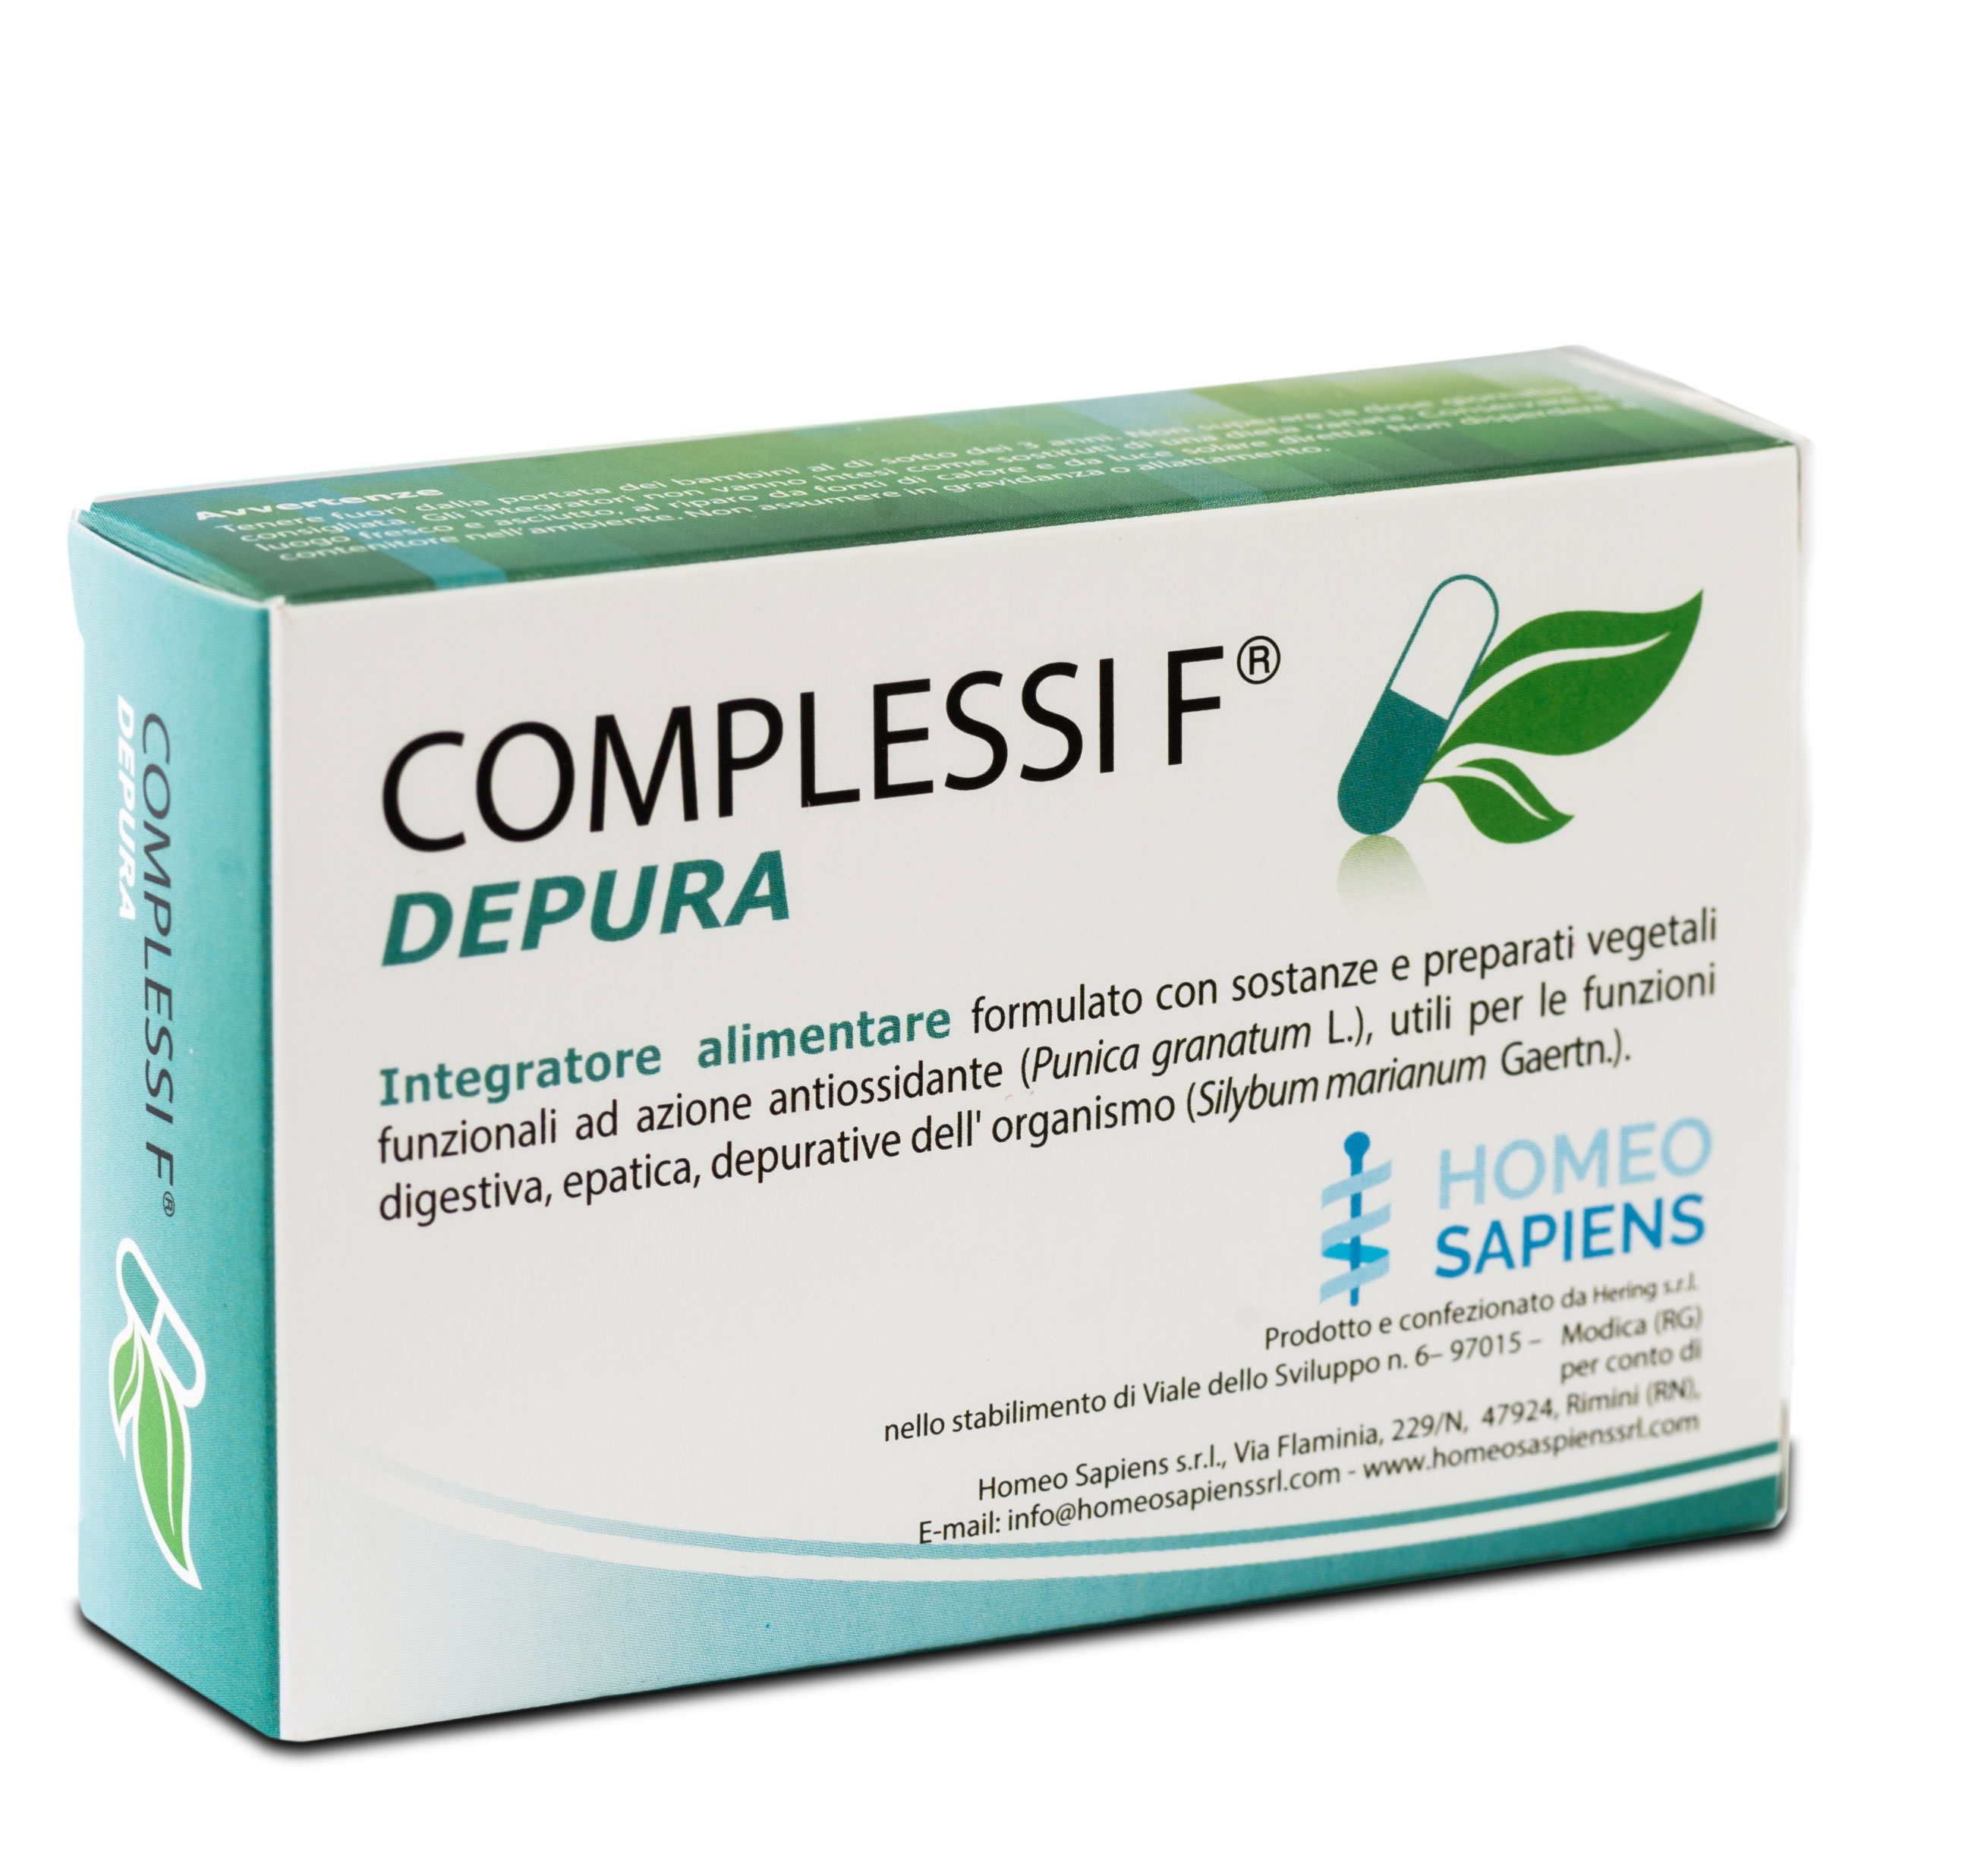 Image of Complessi F Depura Homeo Sapiens 30 Compresse